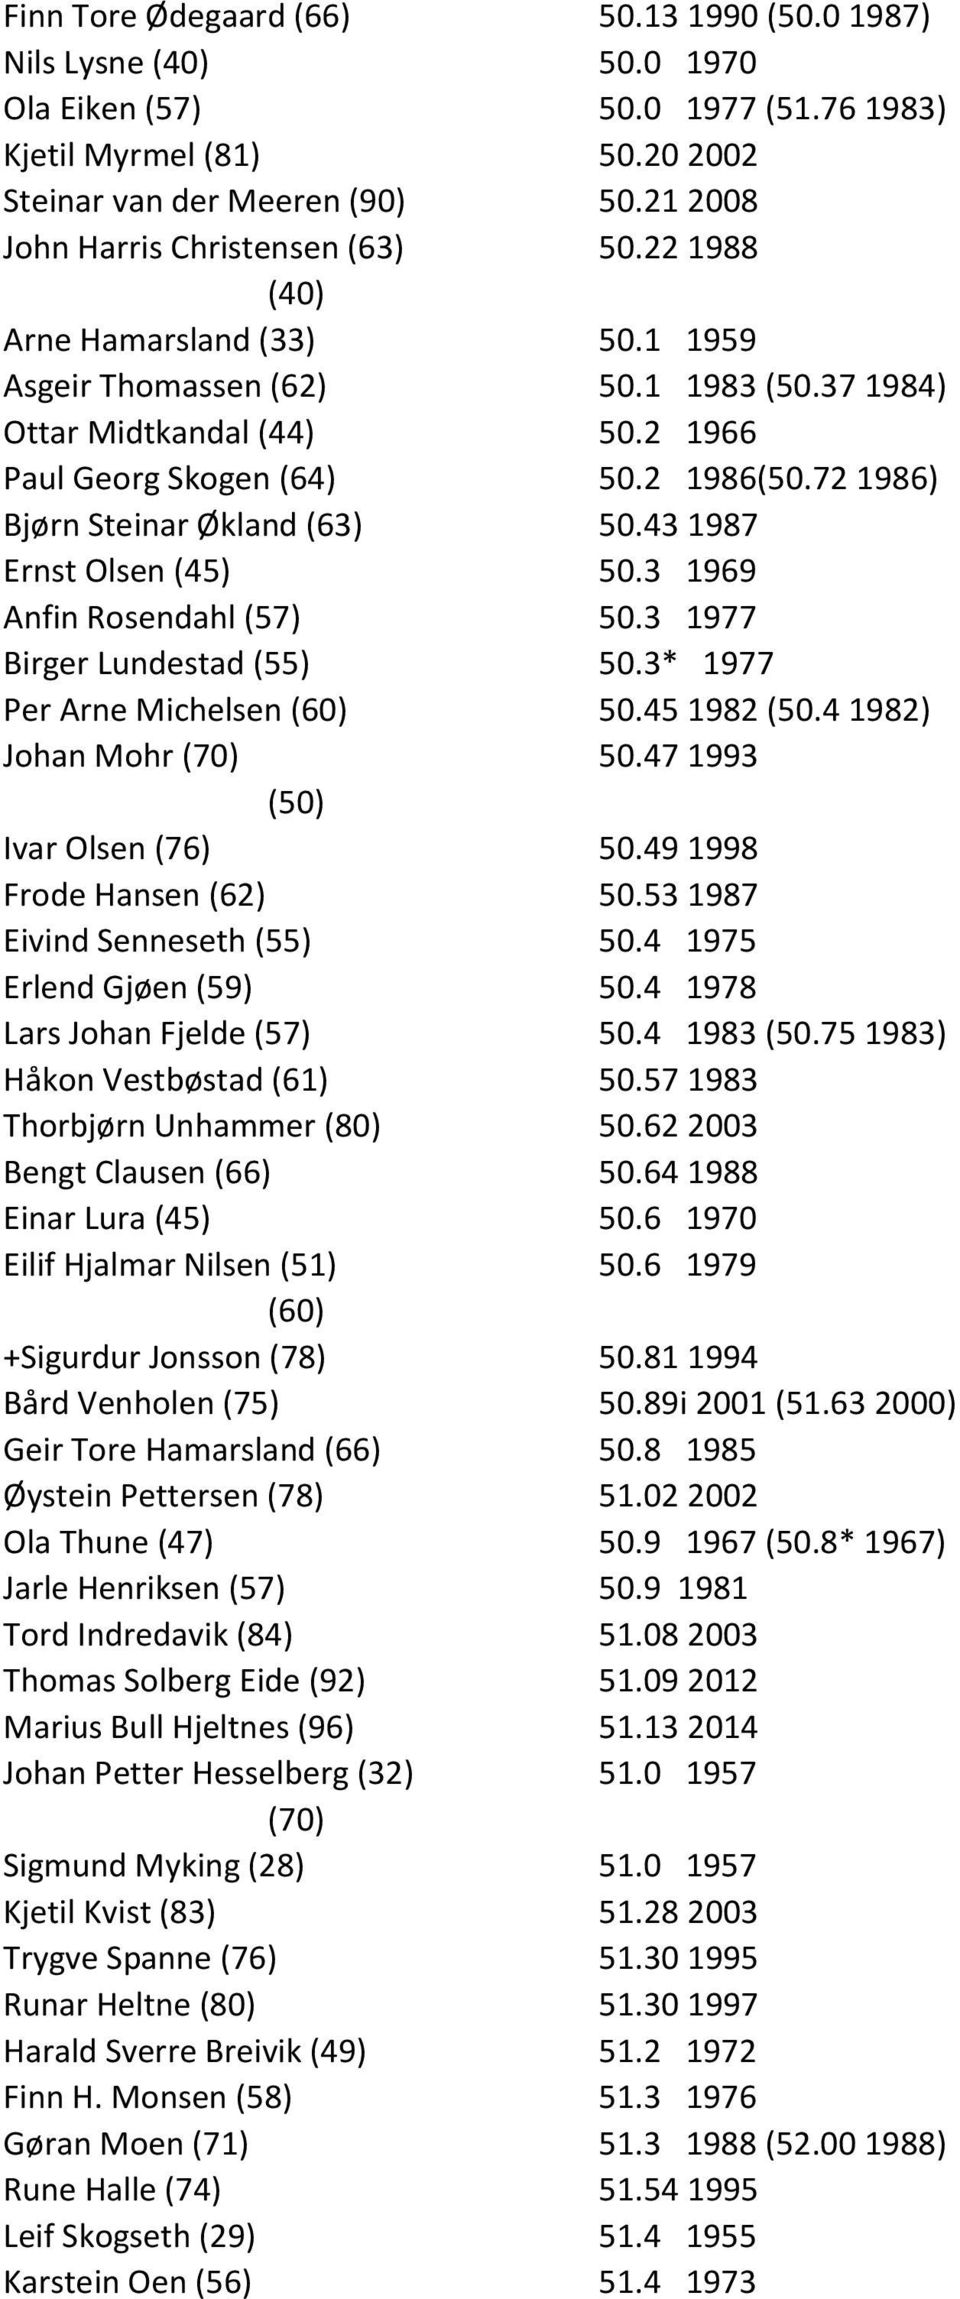 72 1986) Bjørn Steinar Økland (63) 50.43 1987 Ernst Olsen (45) 50.3 1969 Anfin Rosendahl (57) 50.3 1977 Birger Lundestad (55) 50.3* 1977 Per Arne Michelsen (60) 50.45 1982 (50.